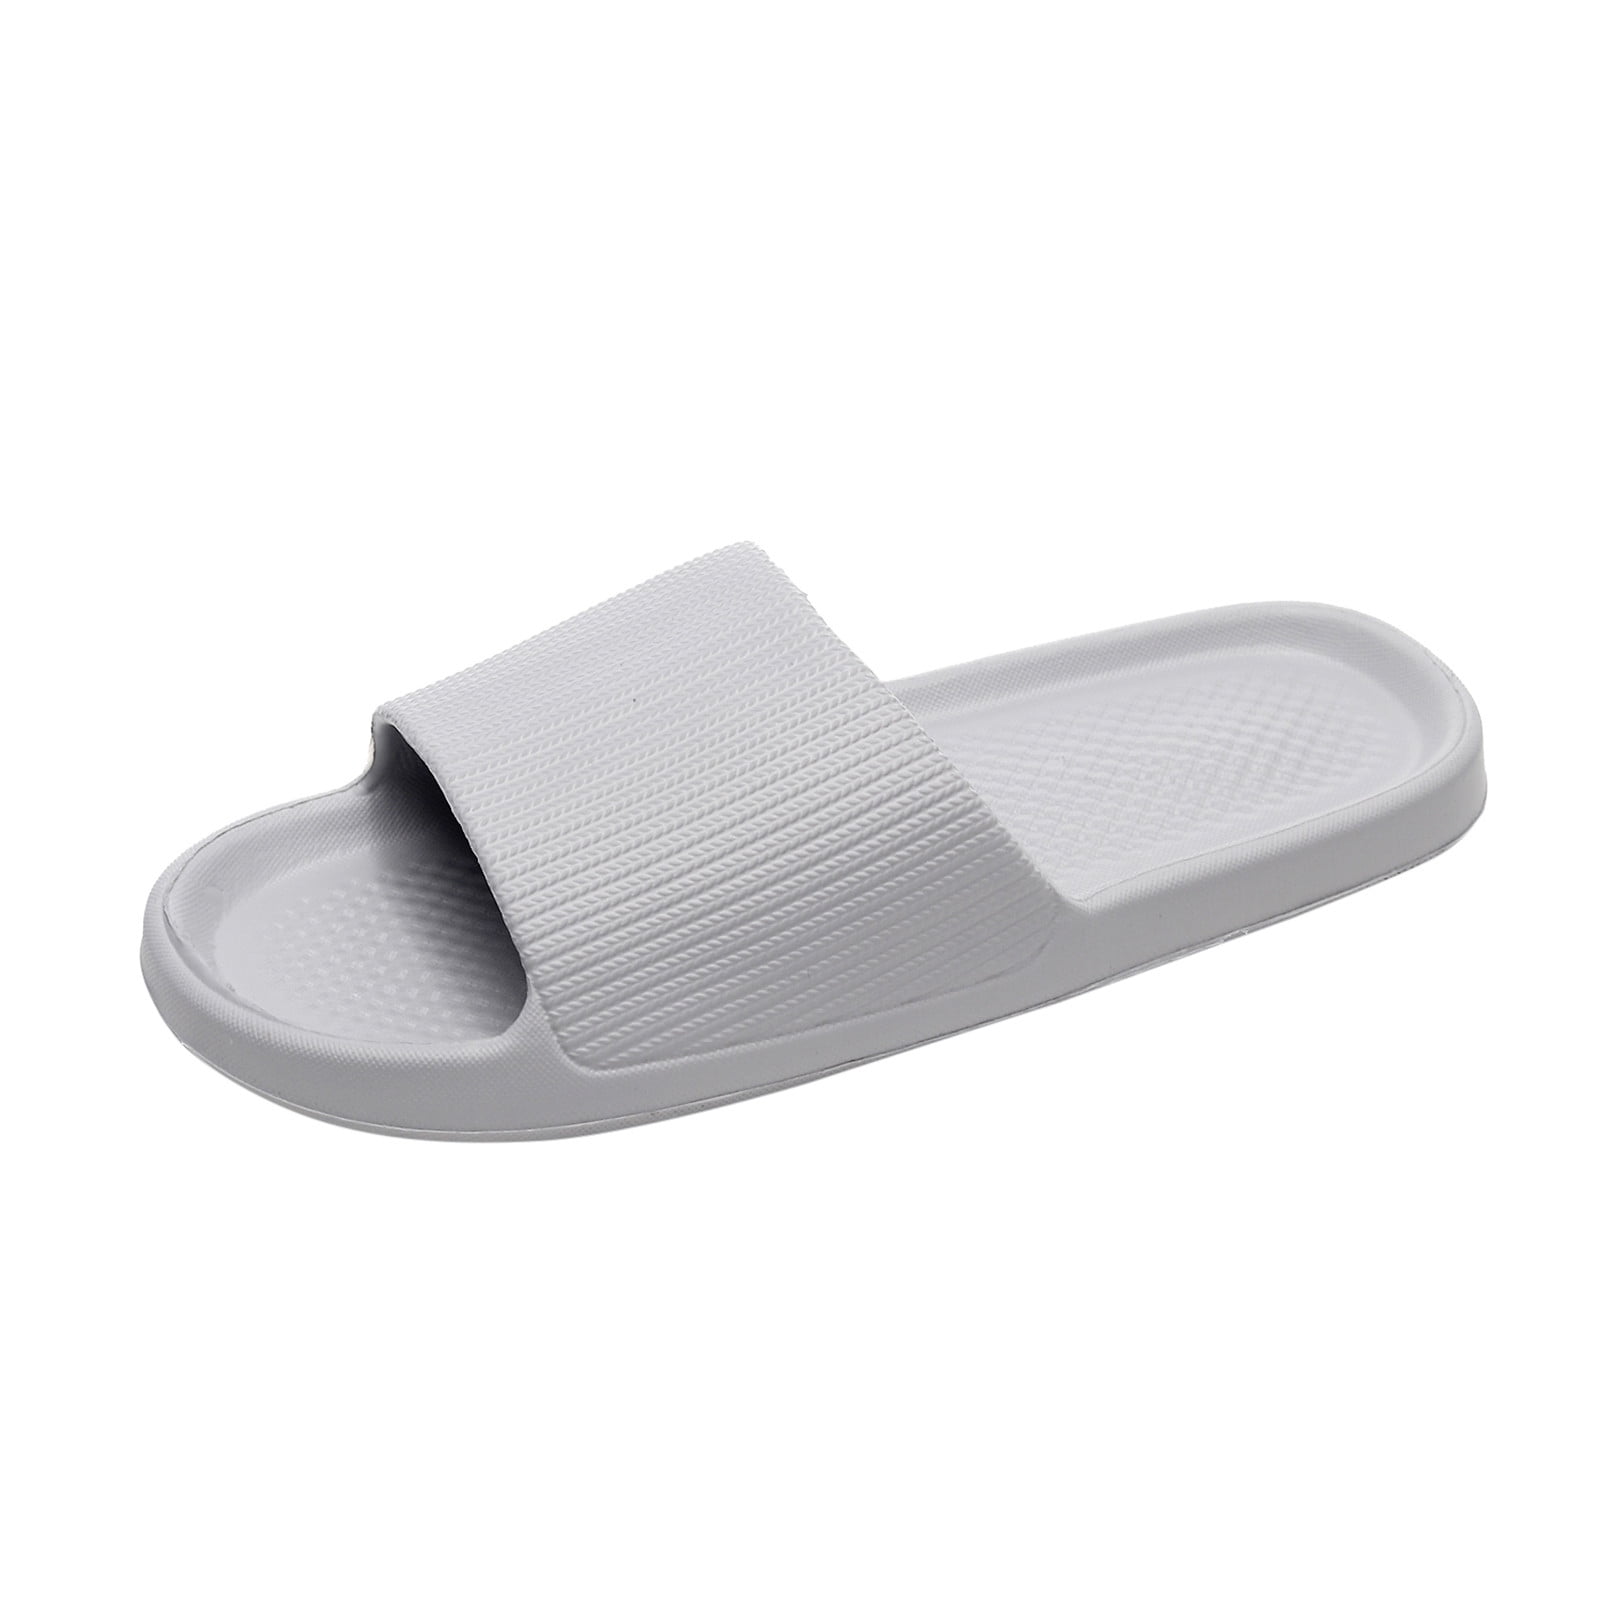 KaLI_store Slippers for Men Non-Slip Shower Sandals Soft Thick Sole ...